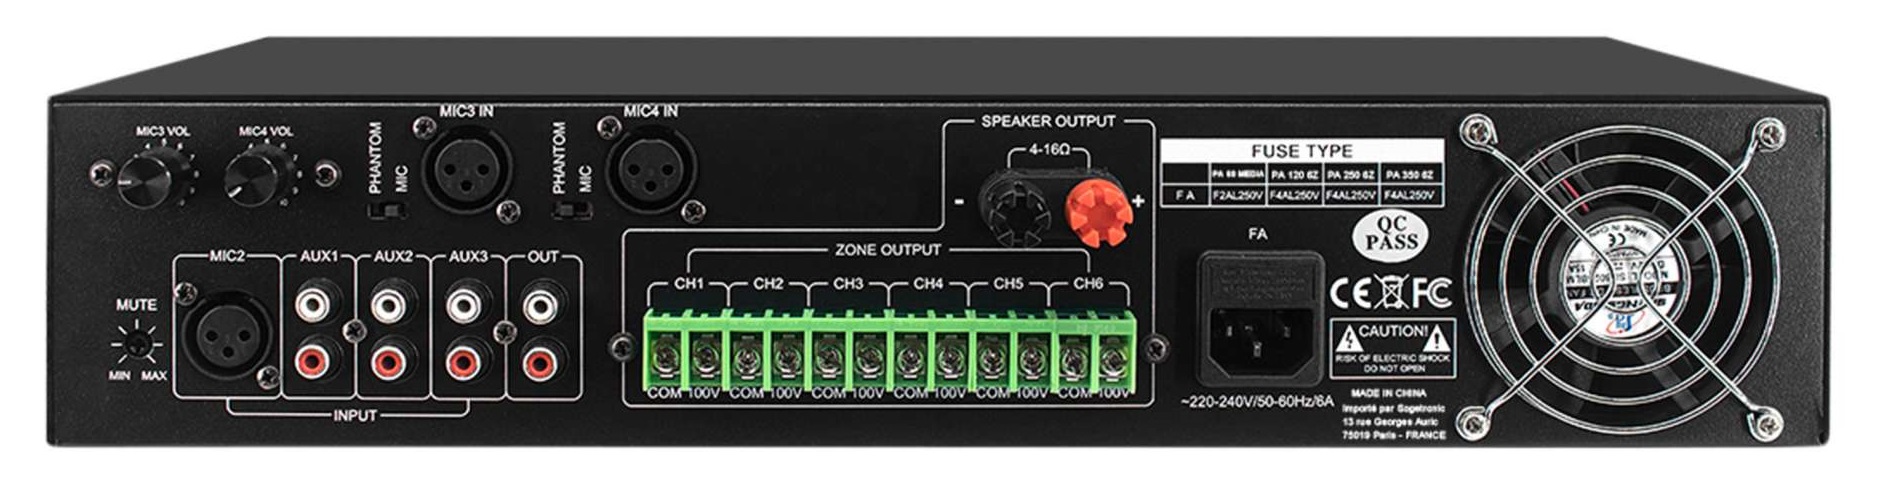 Definitive Audio Pa 350 6z - Multiple channels power amplifier - Variation 1